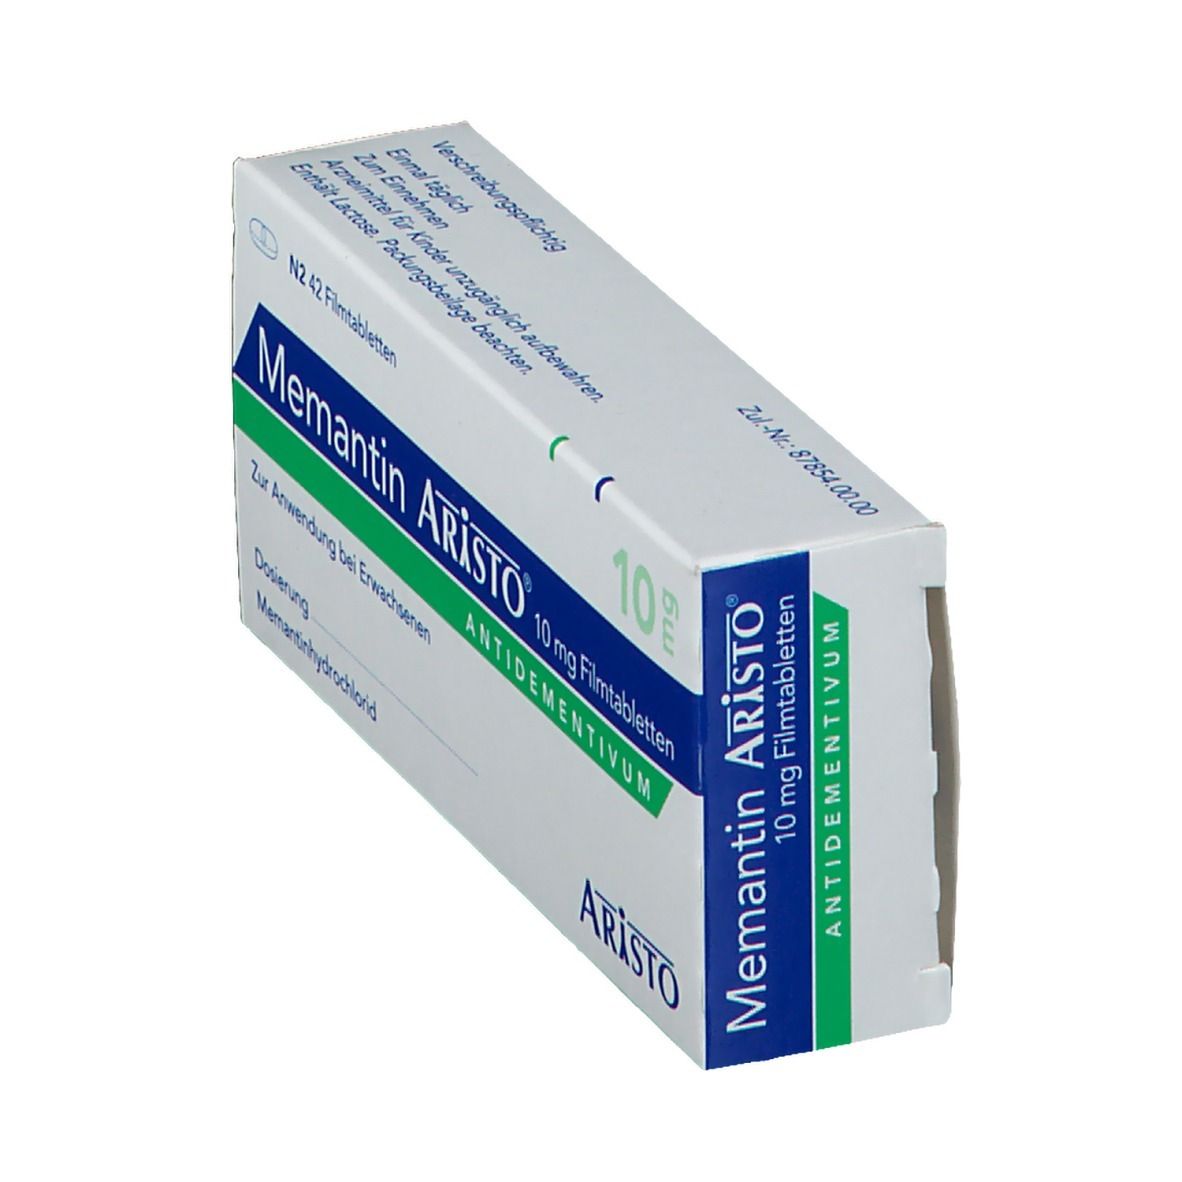 Memantin Aristo® 10 mg